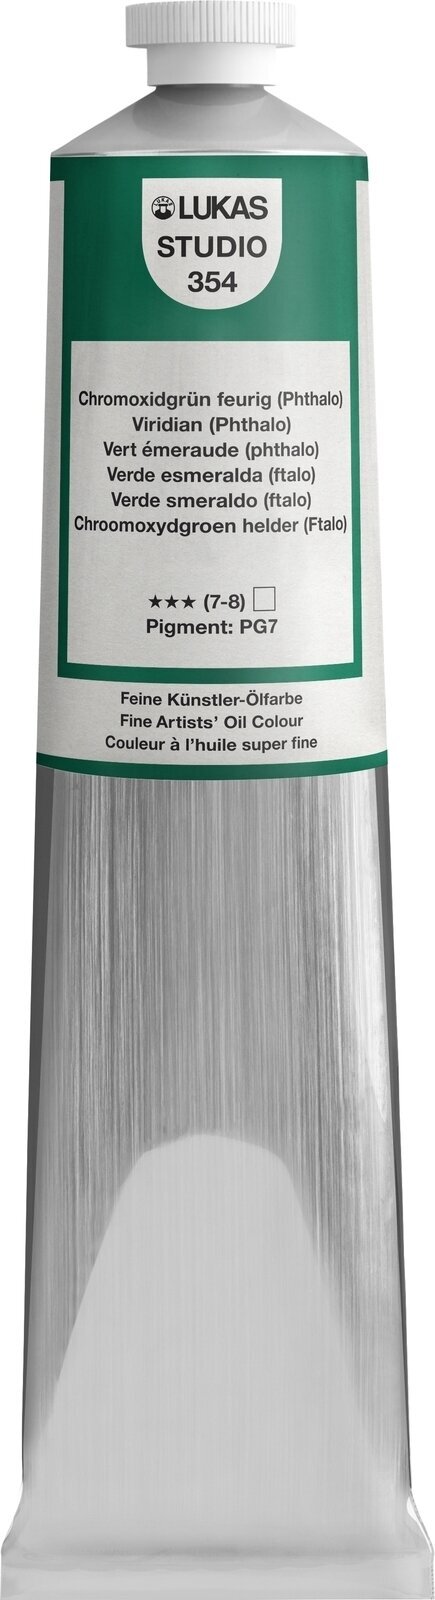 Ölfarbe Lukas Studio Oil Paint Aluminium Tube Ölgemälde Viridian (Phthalo) 200 ml 1 Stck